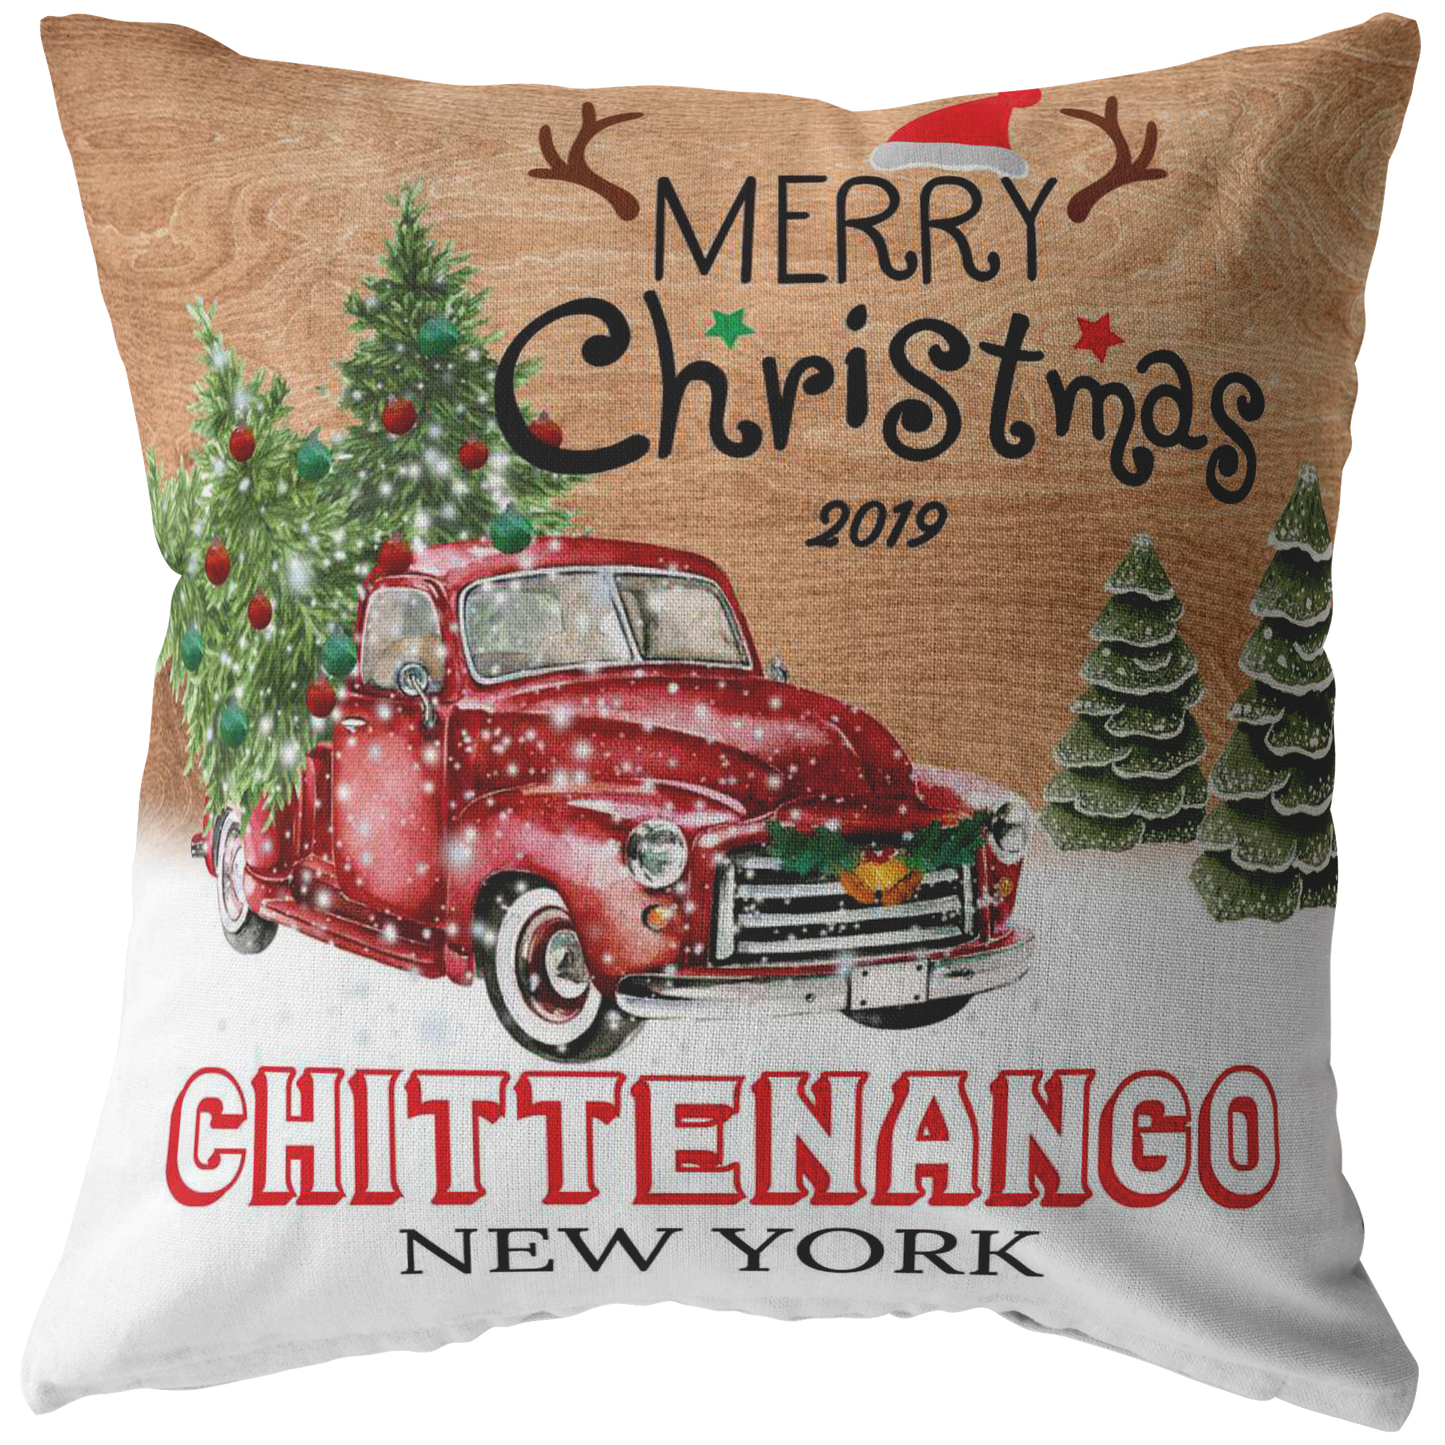 PL-20886012-sp-20024 - Merry Christmas Chittenango New York NY State 2019 - Home De